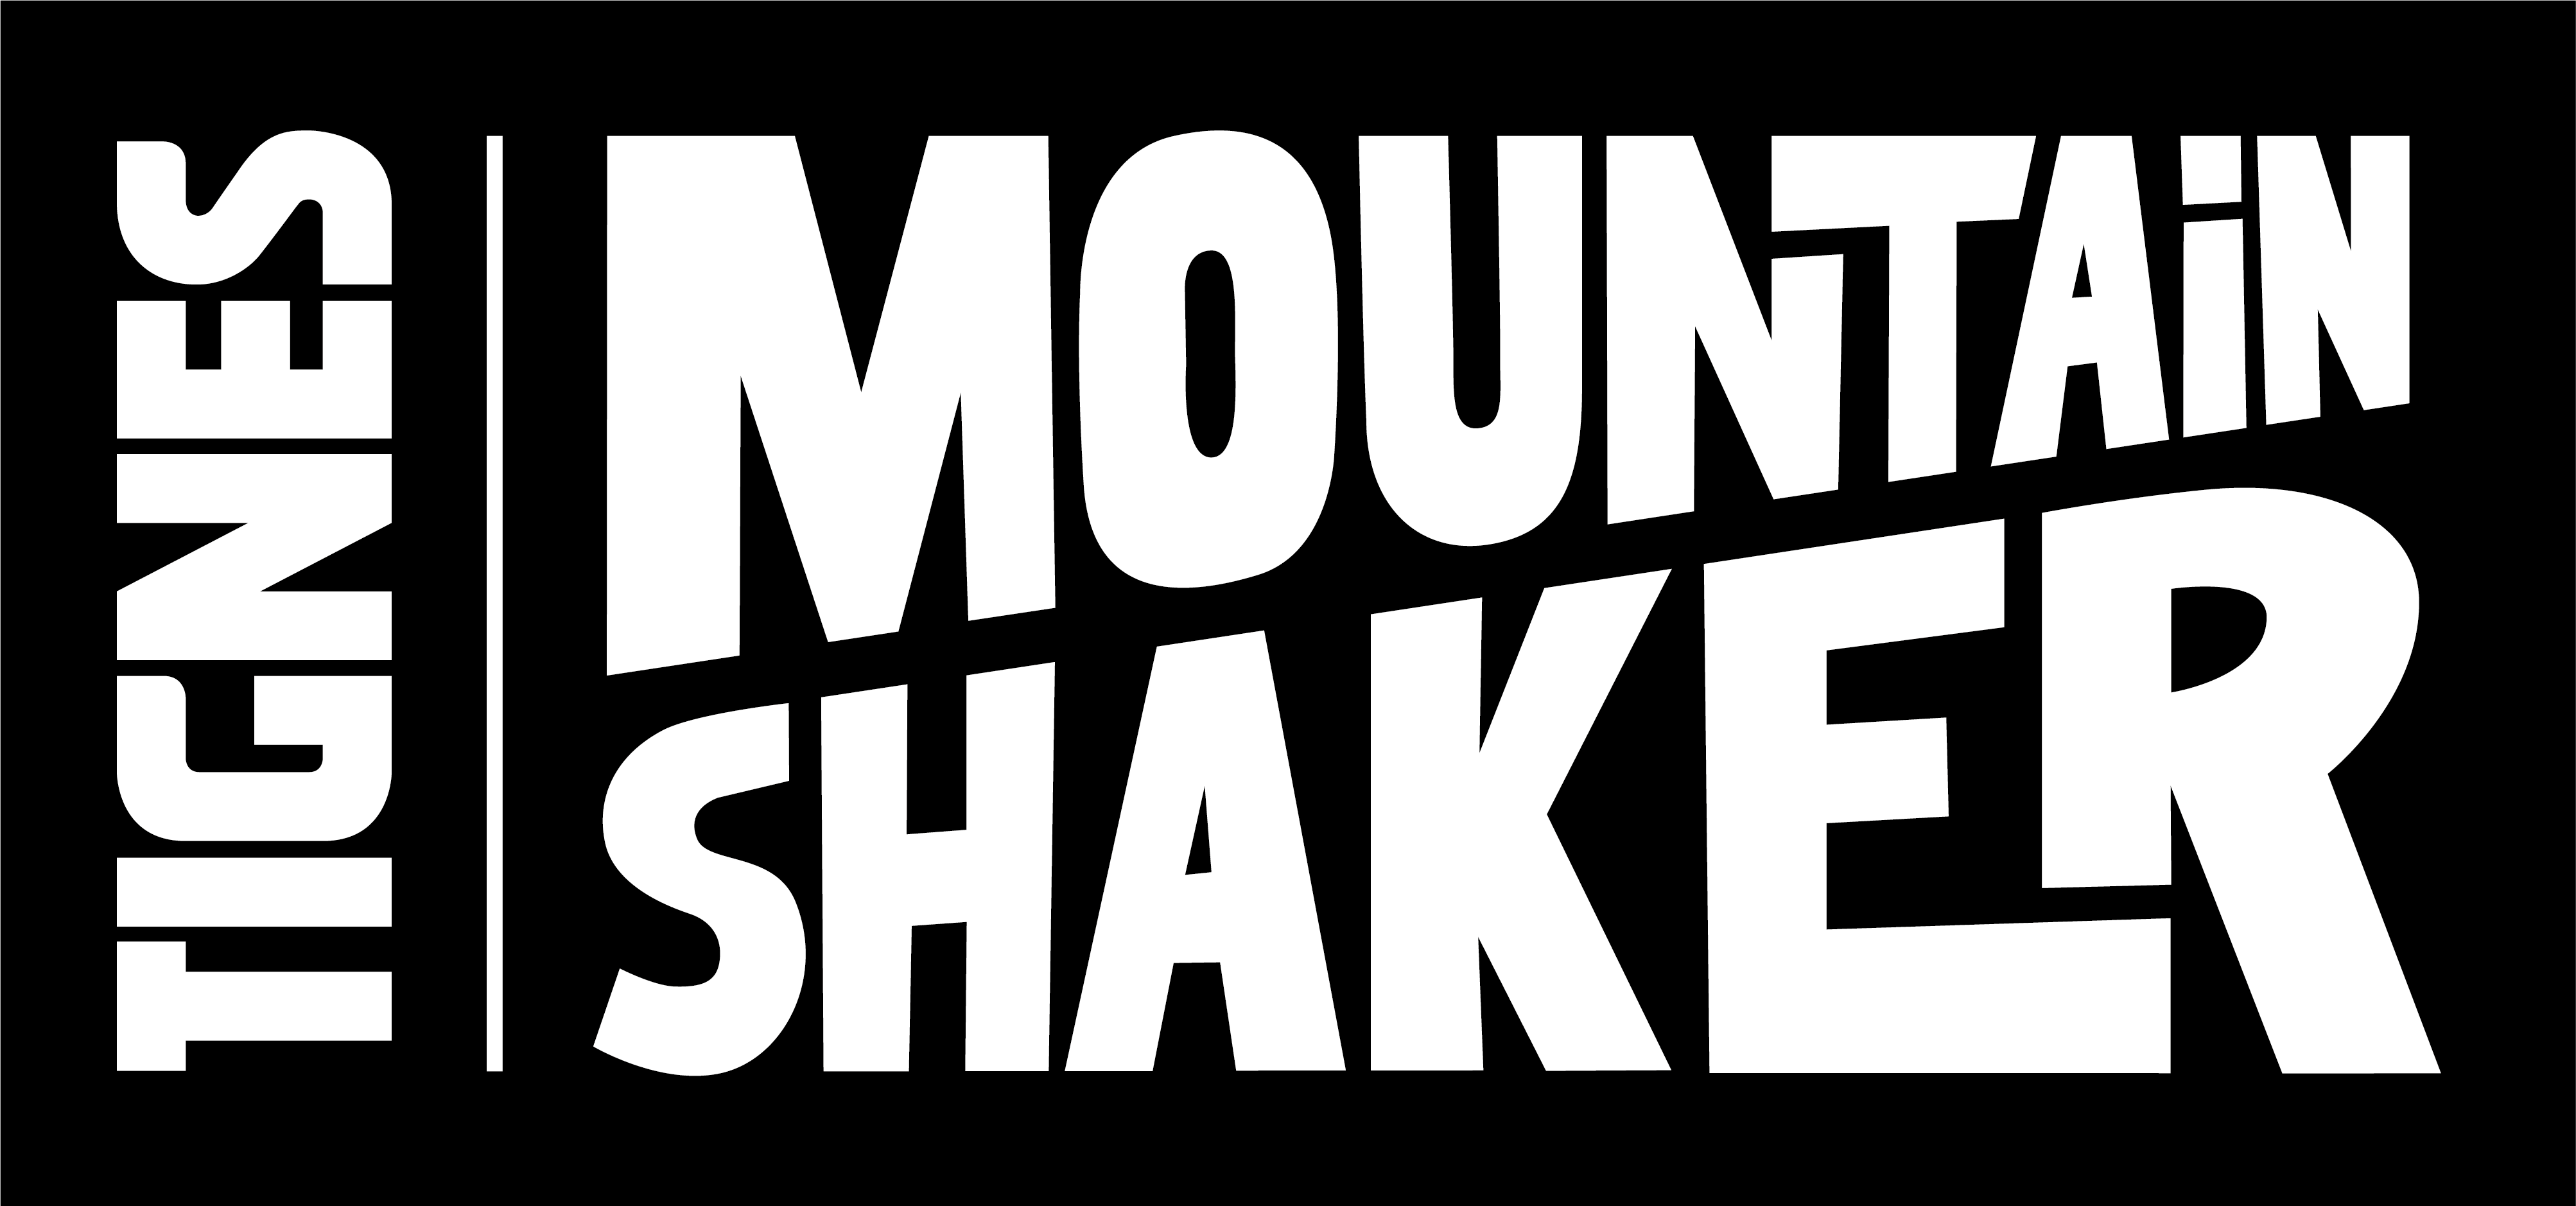 Logo Mountain Shaker